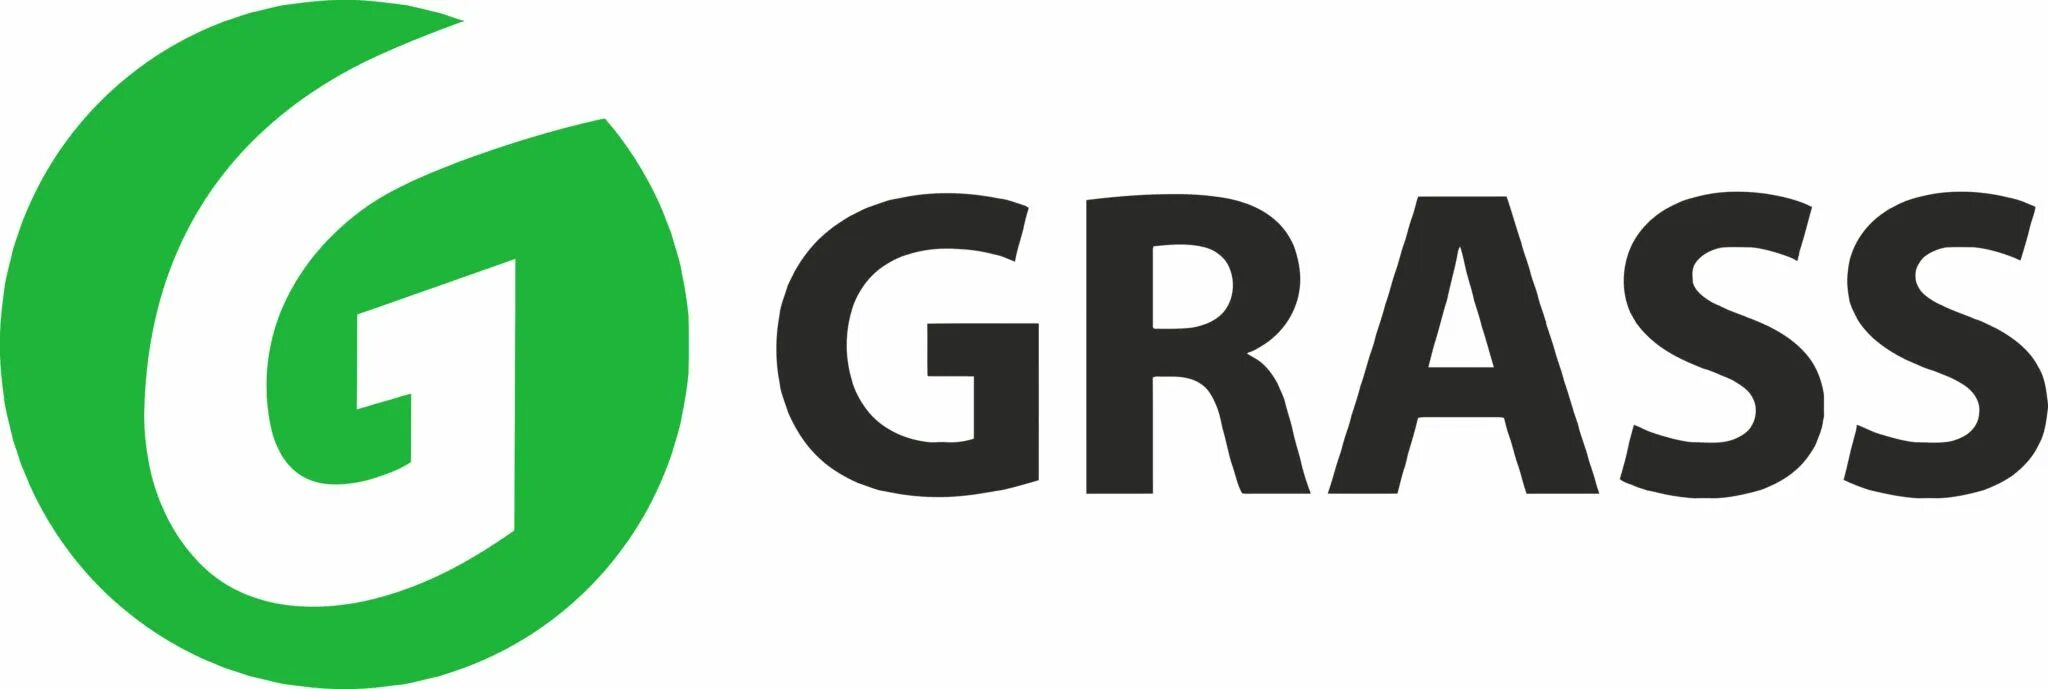 Значок Грасс. Grass автохимия логотип. Логотип Грасса. Грасс бытовая химия логотип.